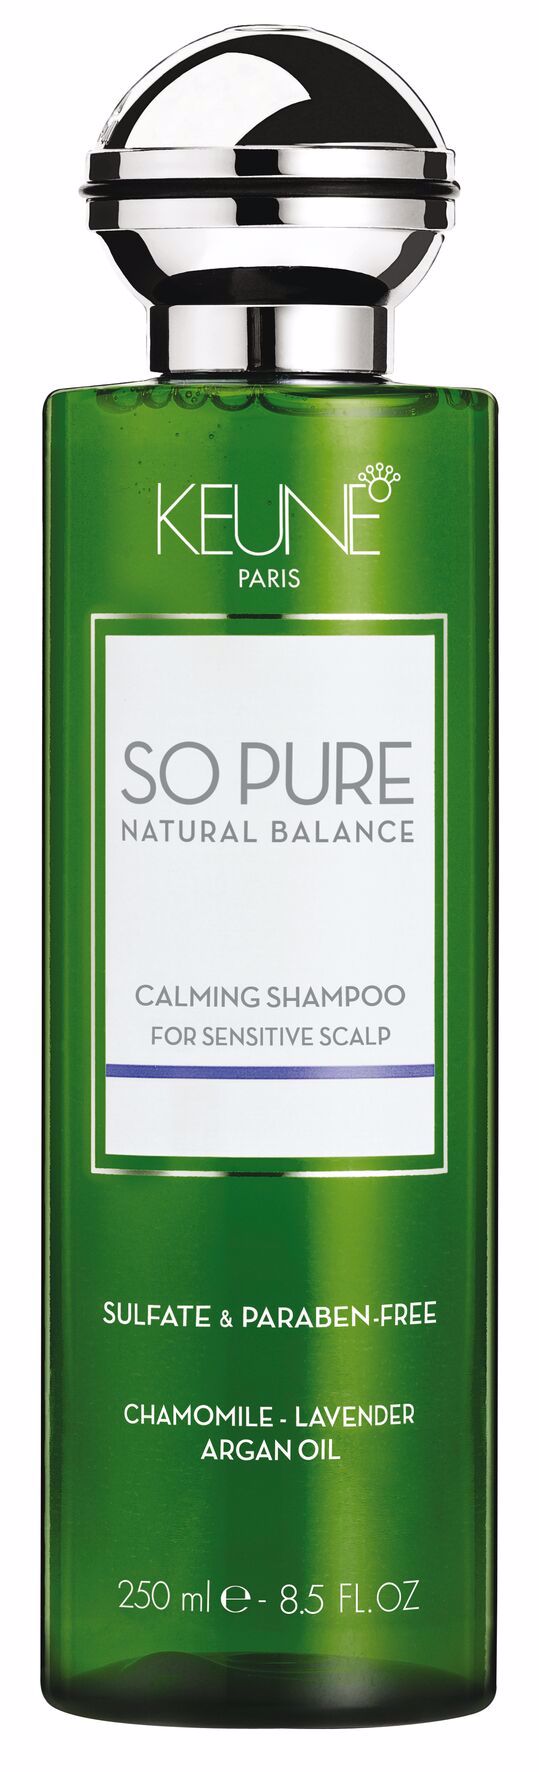 SP Calming Shampoo, 250ml